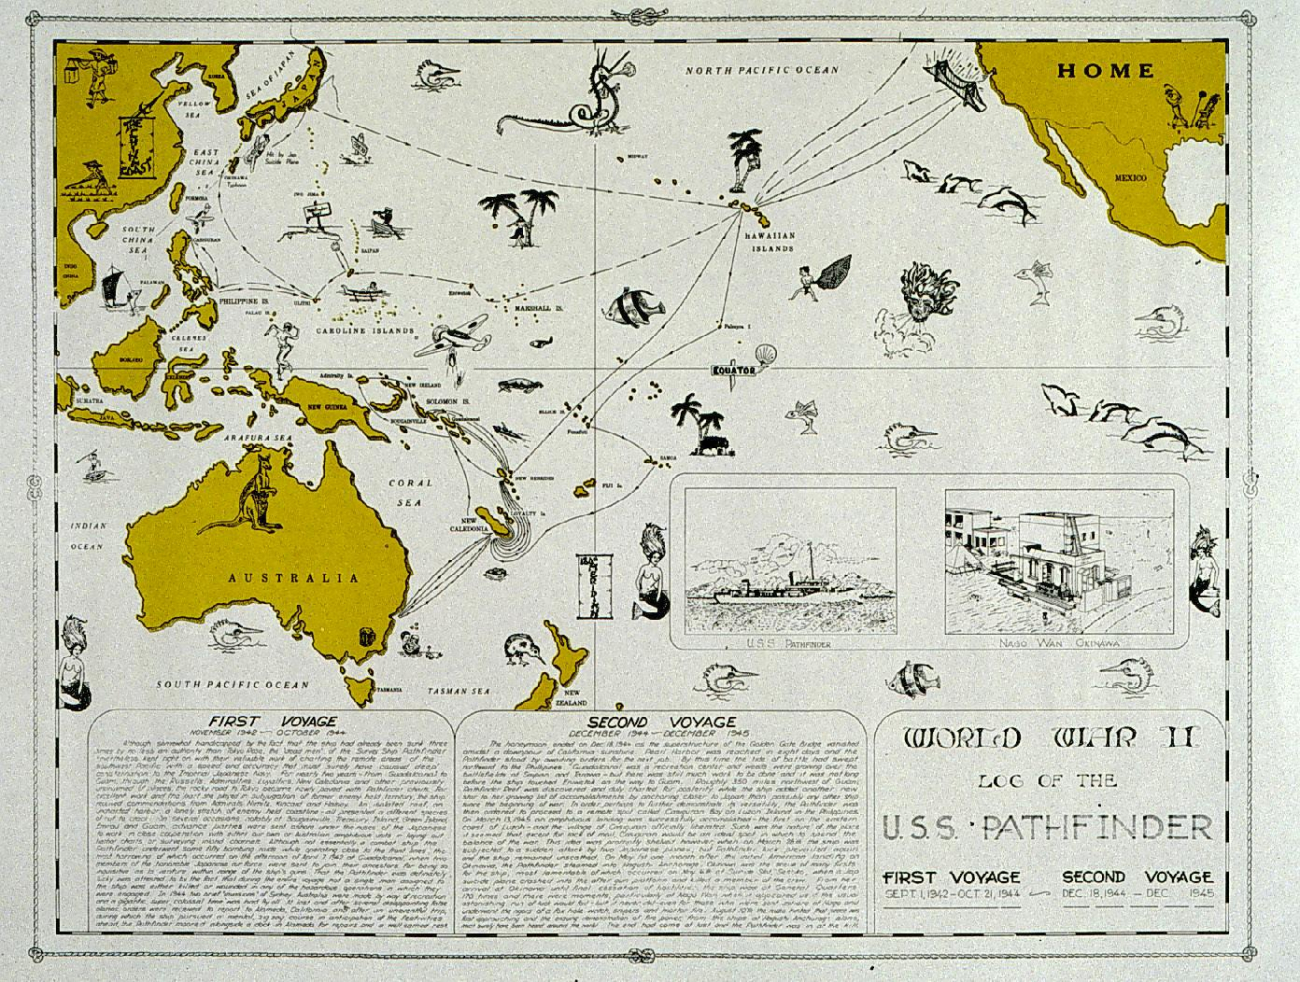 Souvenir chart of the PATHFINDER service in World War II